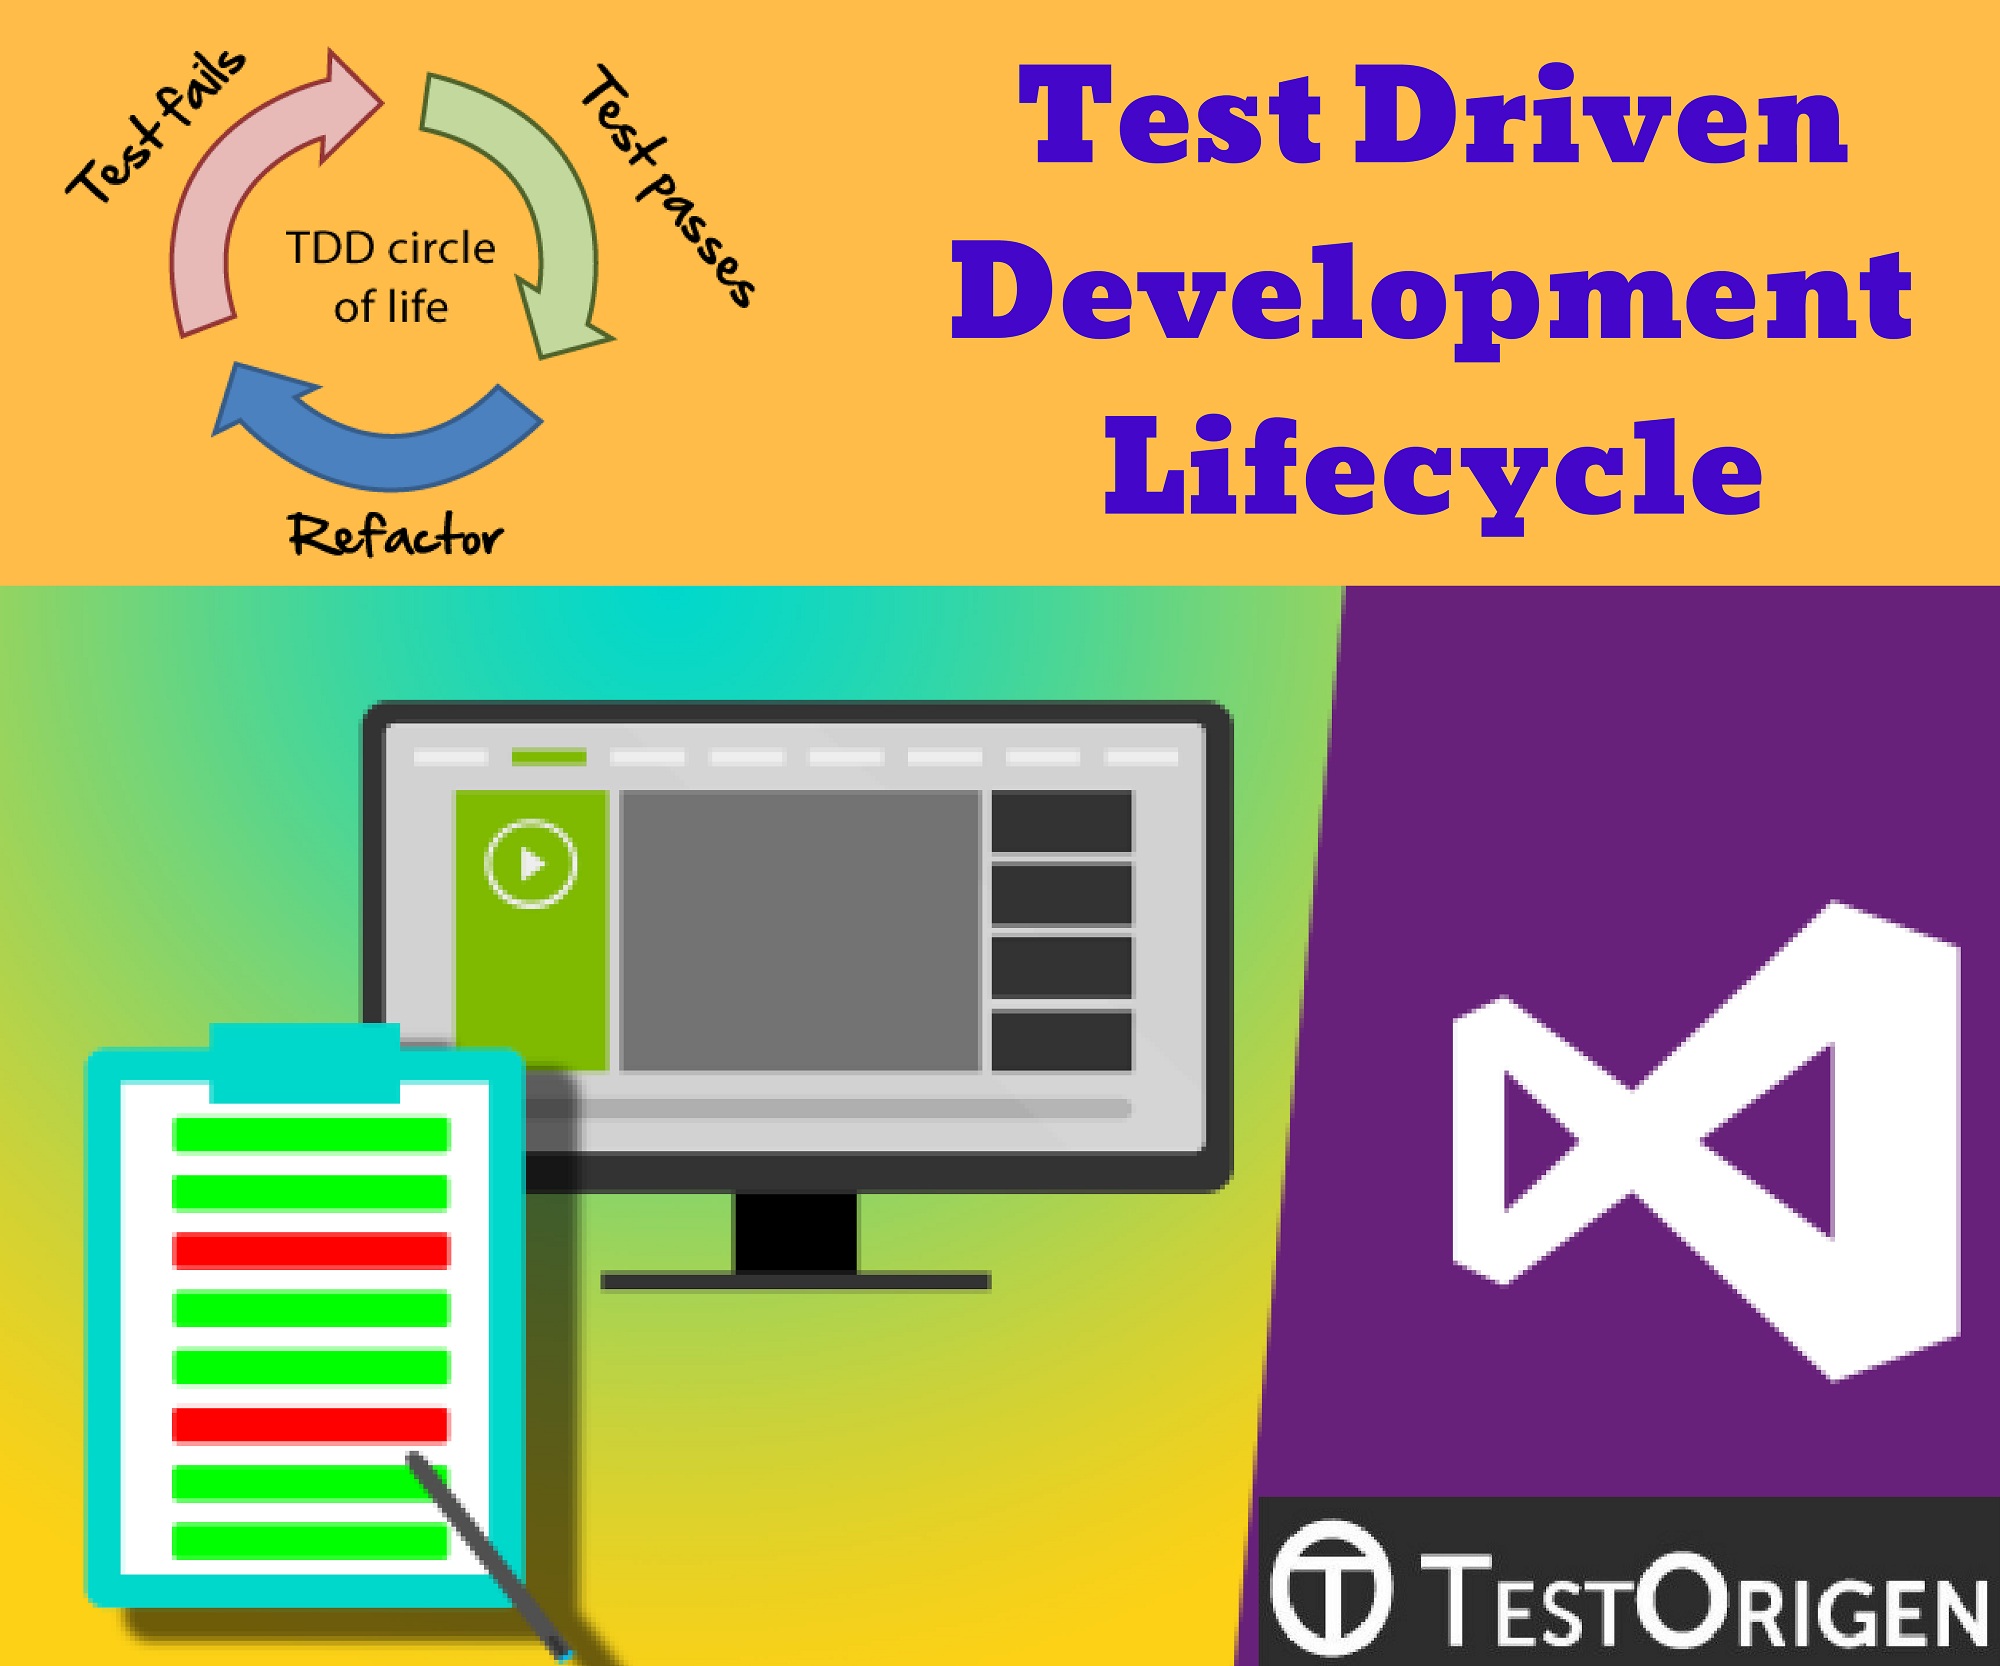 Test Driven Development Lifecycle